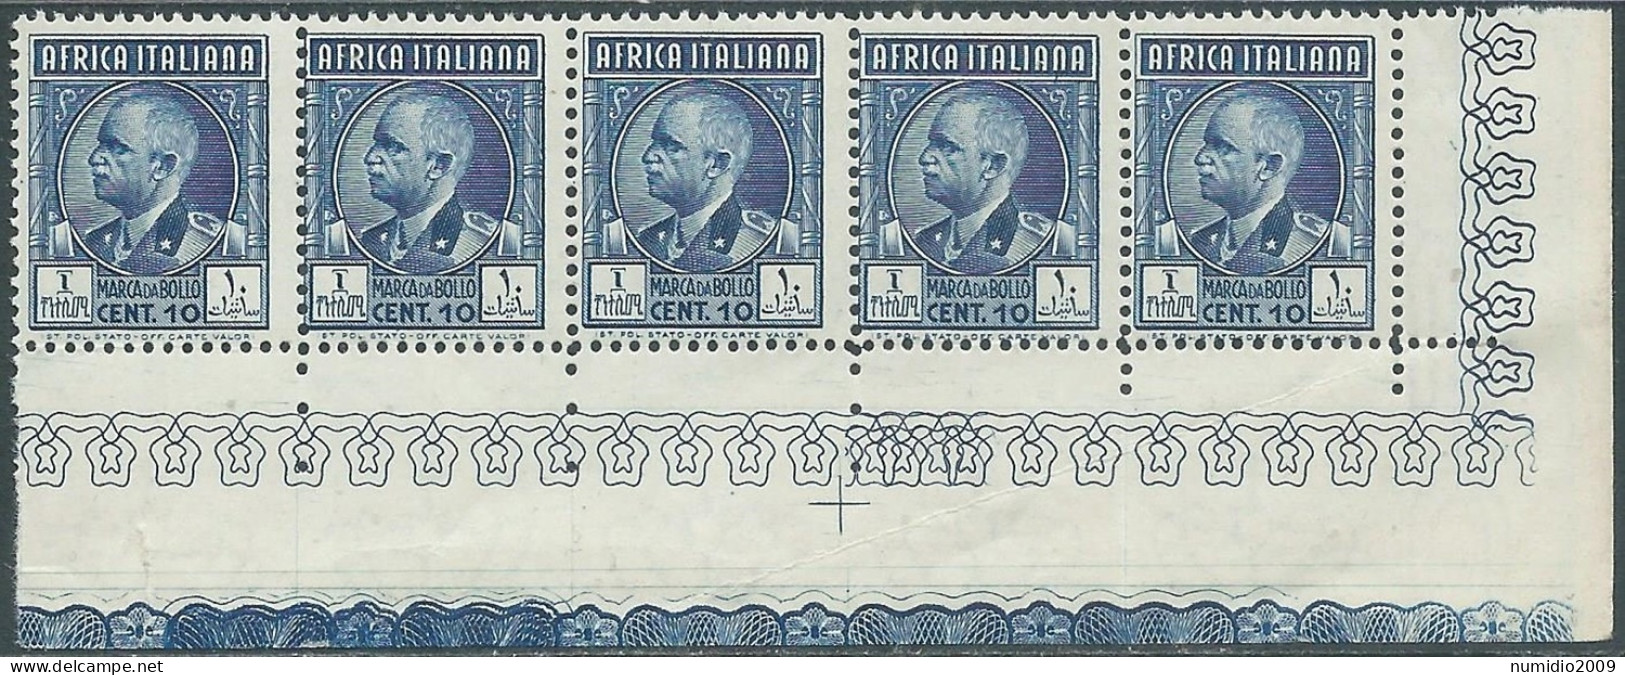 1939 AFRICA ITALIANA MARCA DA BOLLO 10 CENT BLOCCO DI 5 VALORI MNH ** - CZ39-3 - Italian Eastern Africa